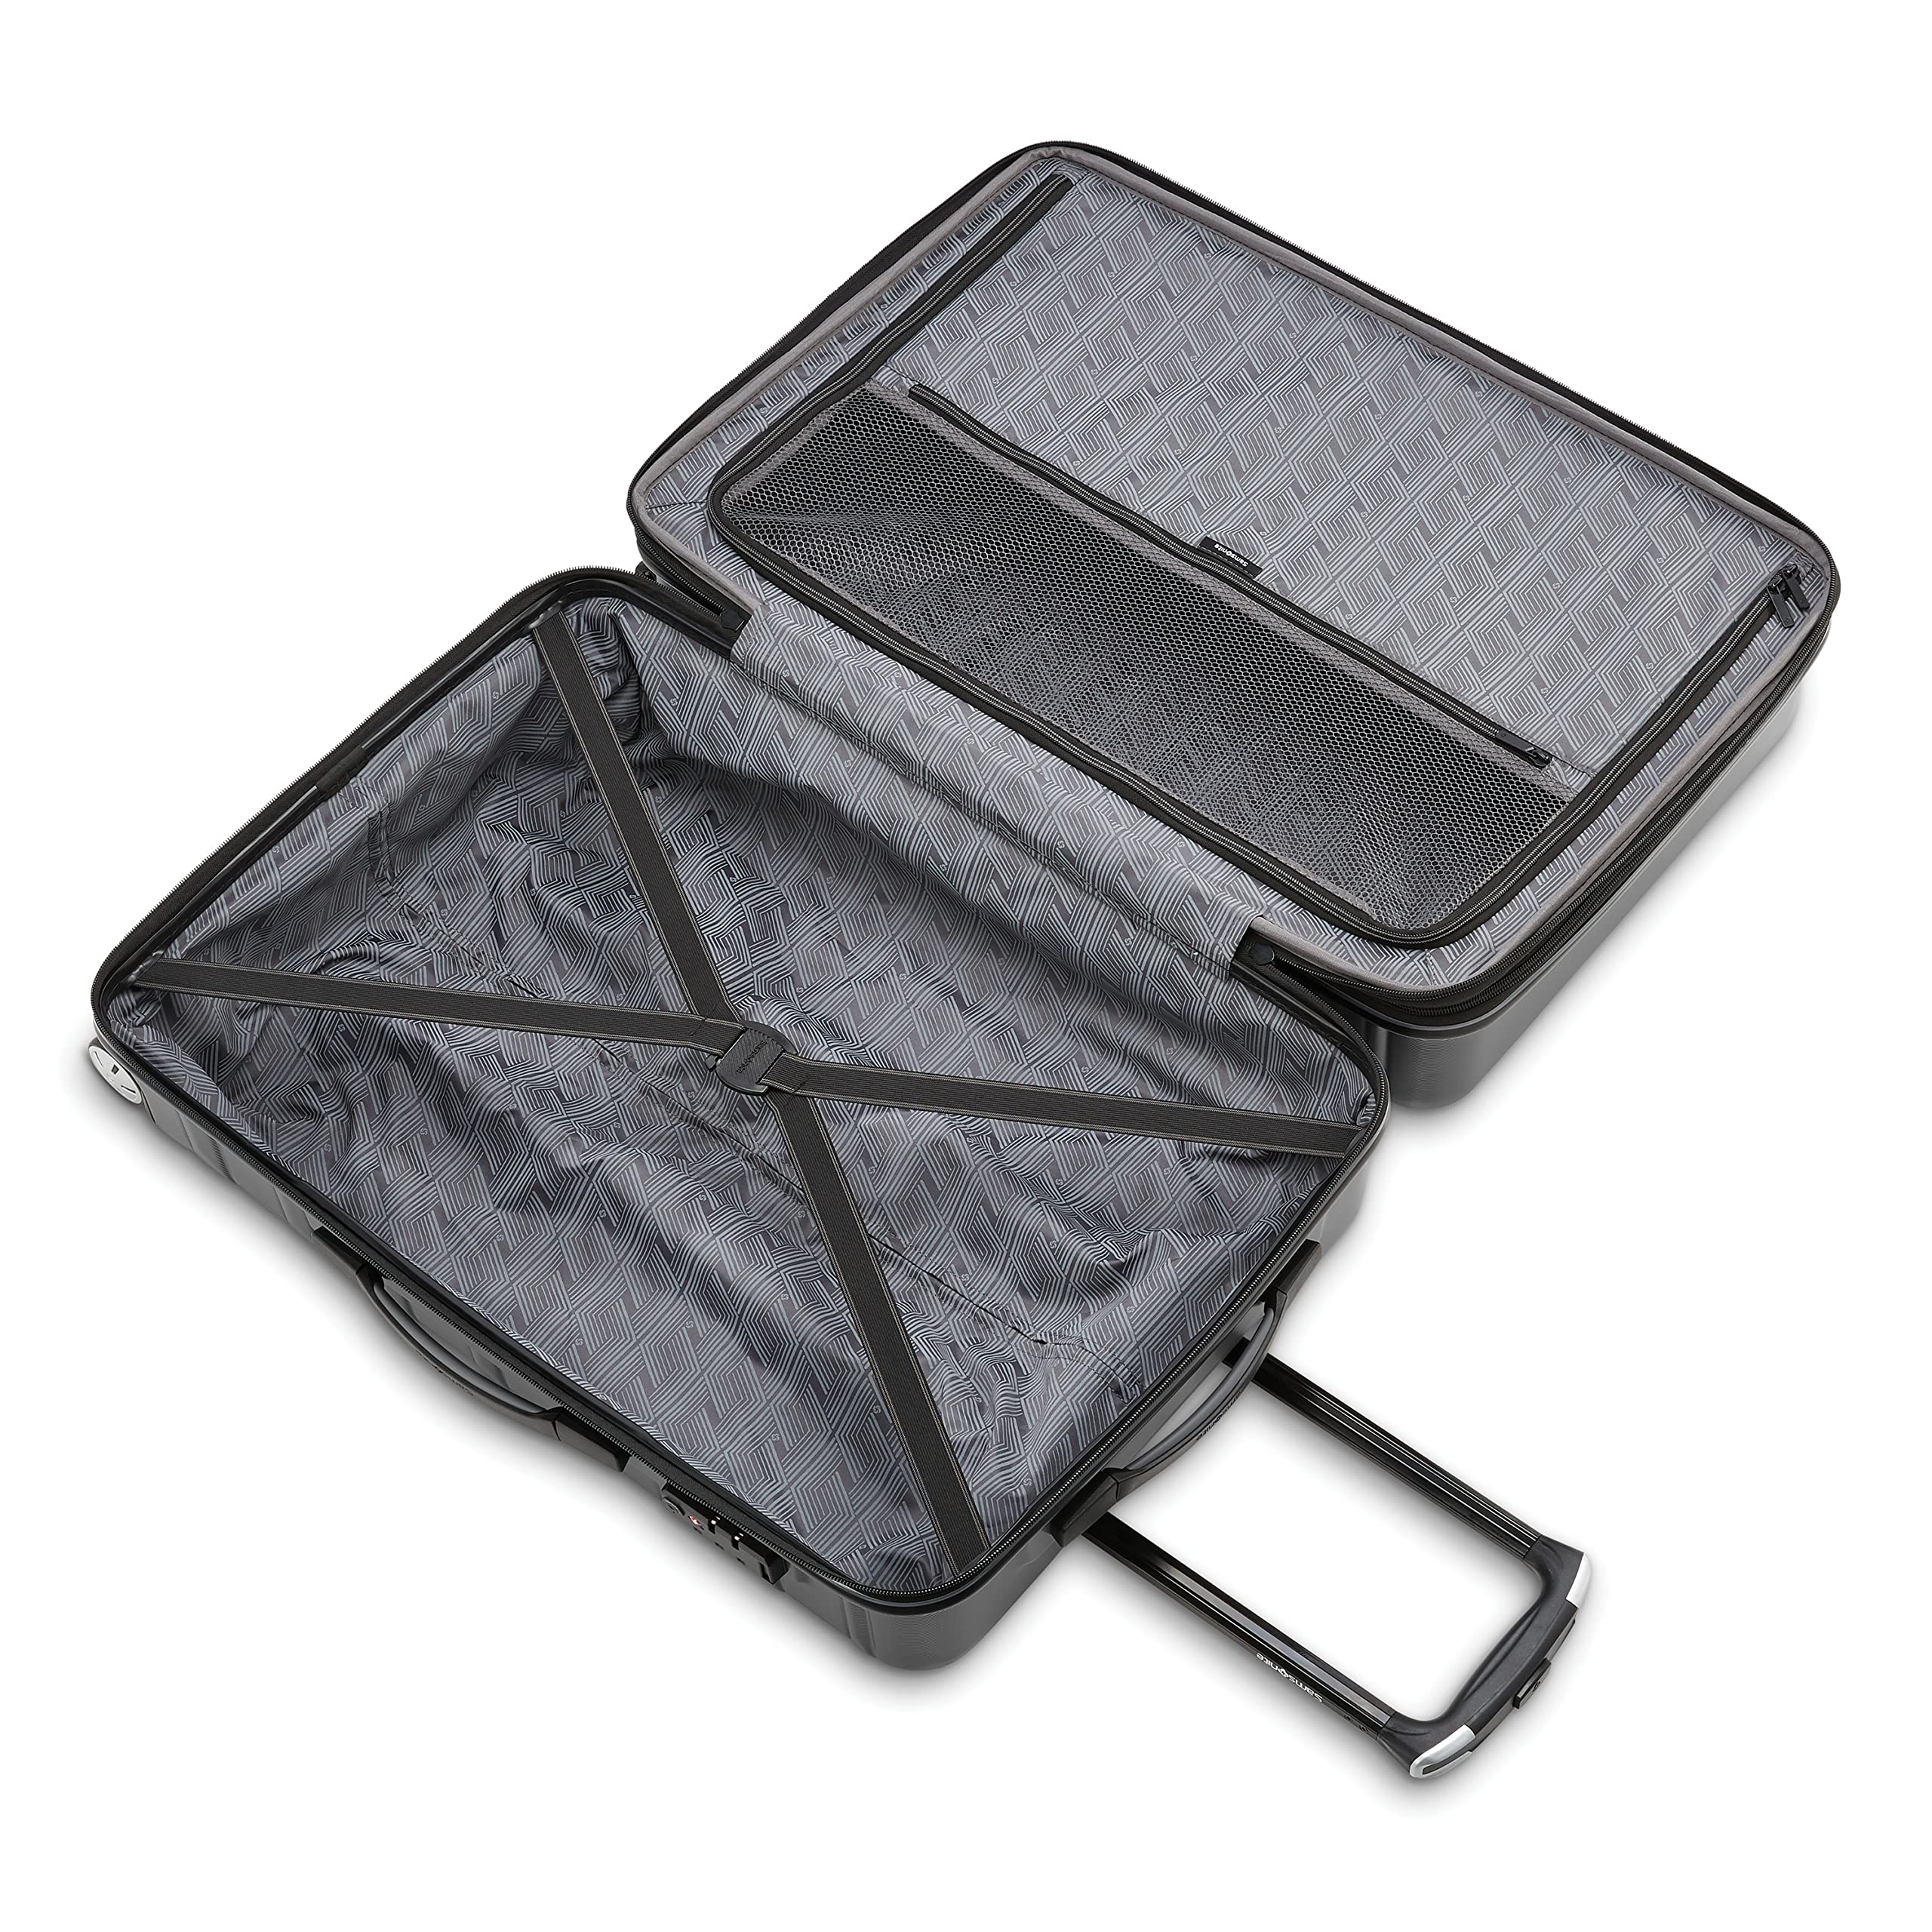 Samsonite Omni 2 Hardside Expandable Luggage with Spinners | Charcoal | Medium